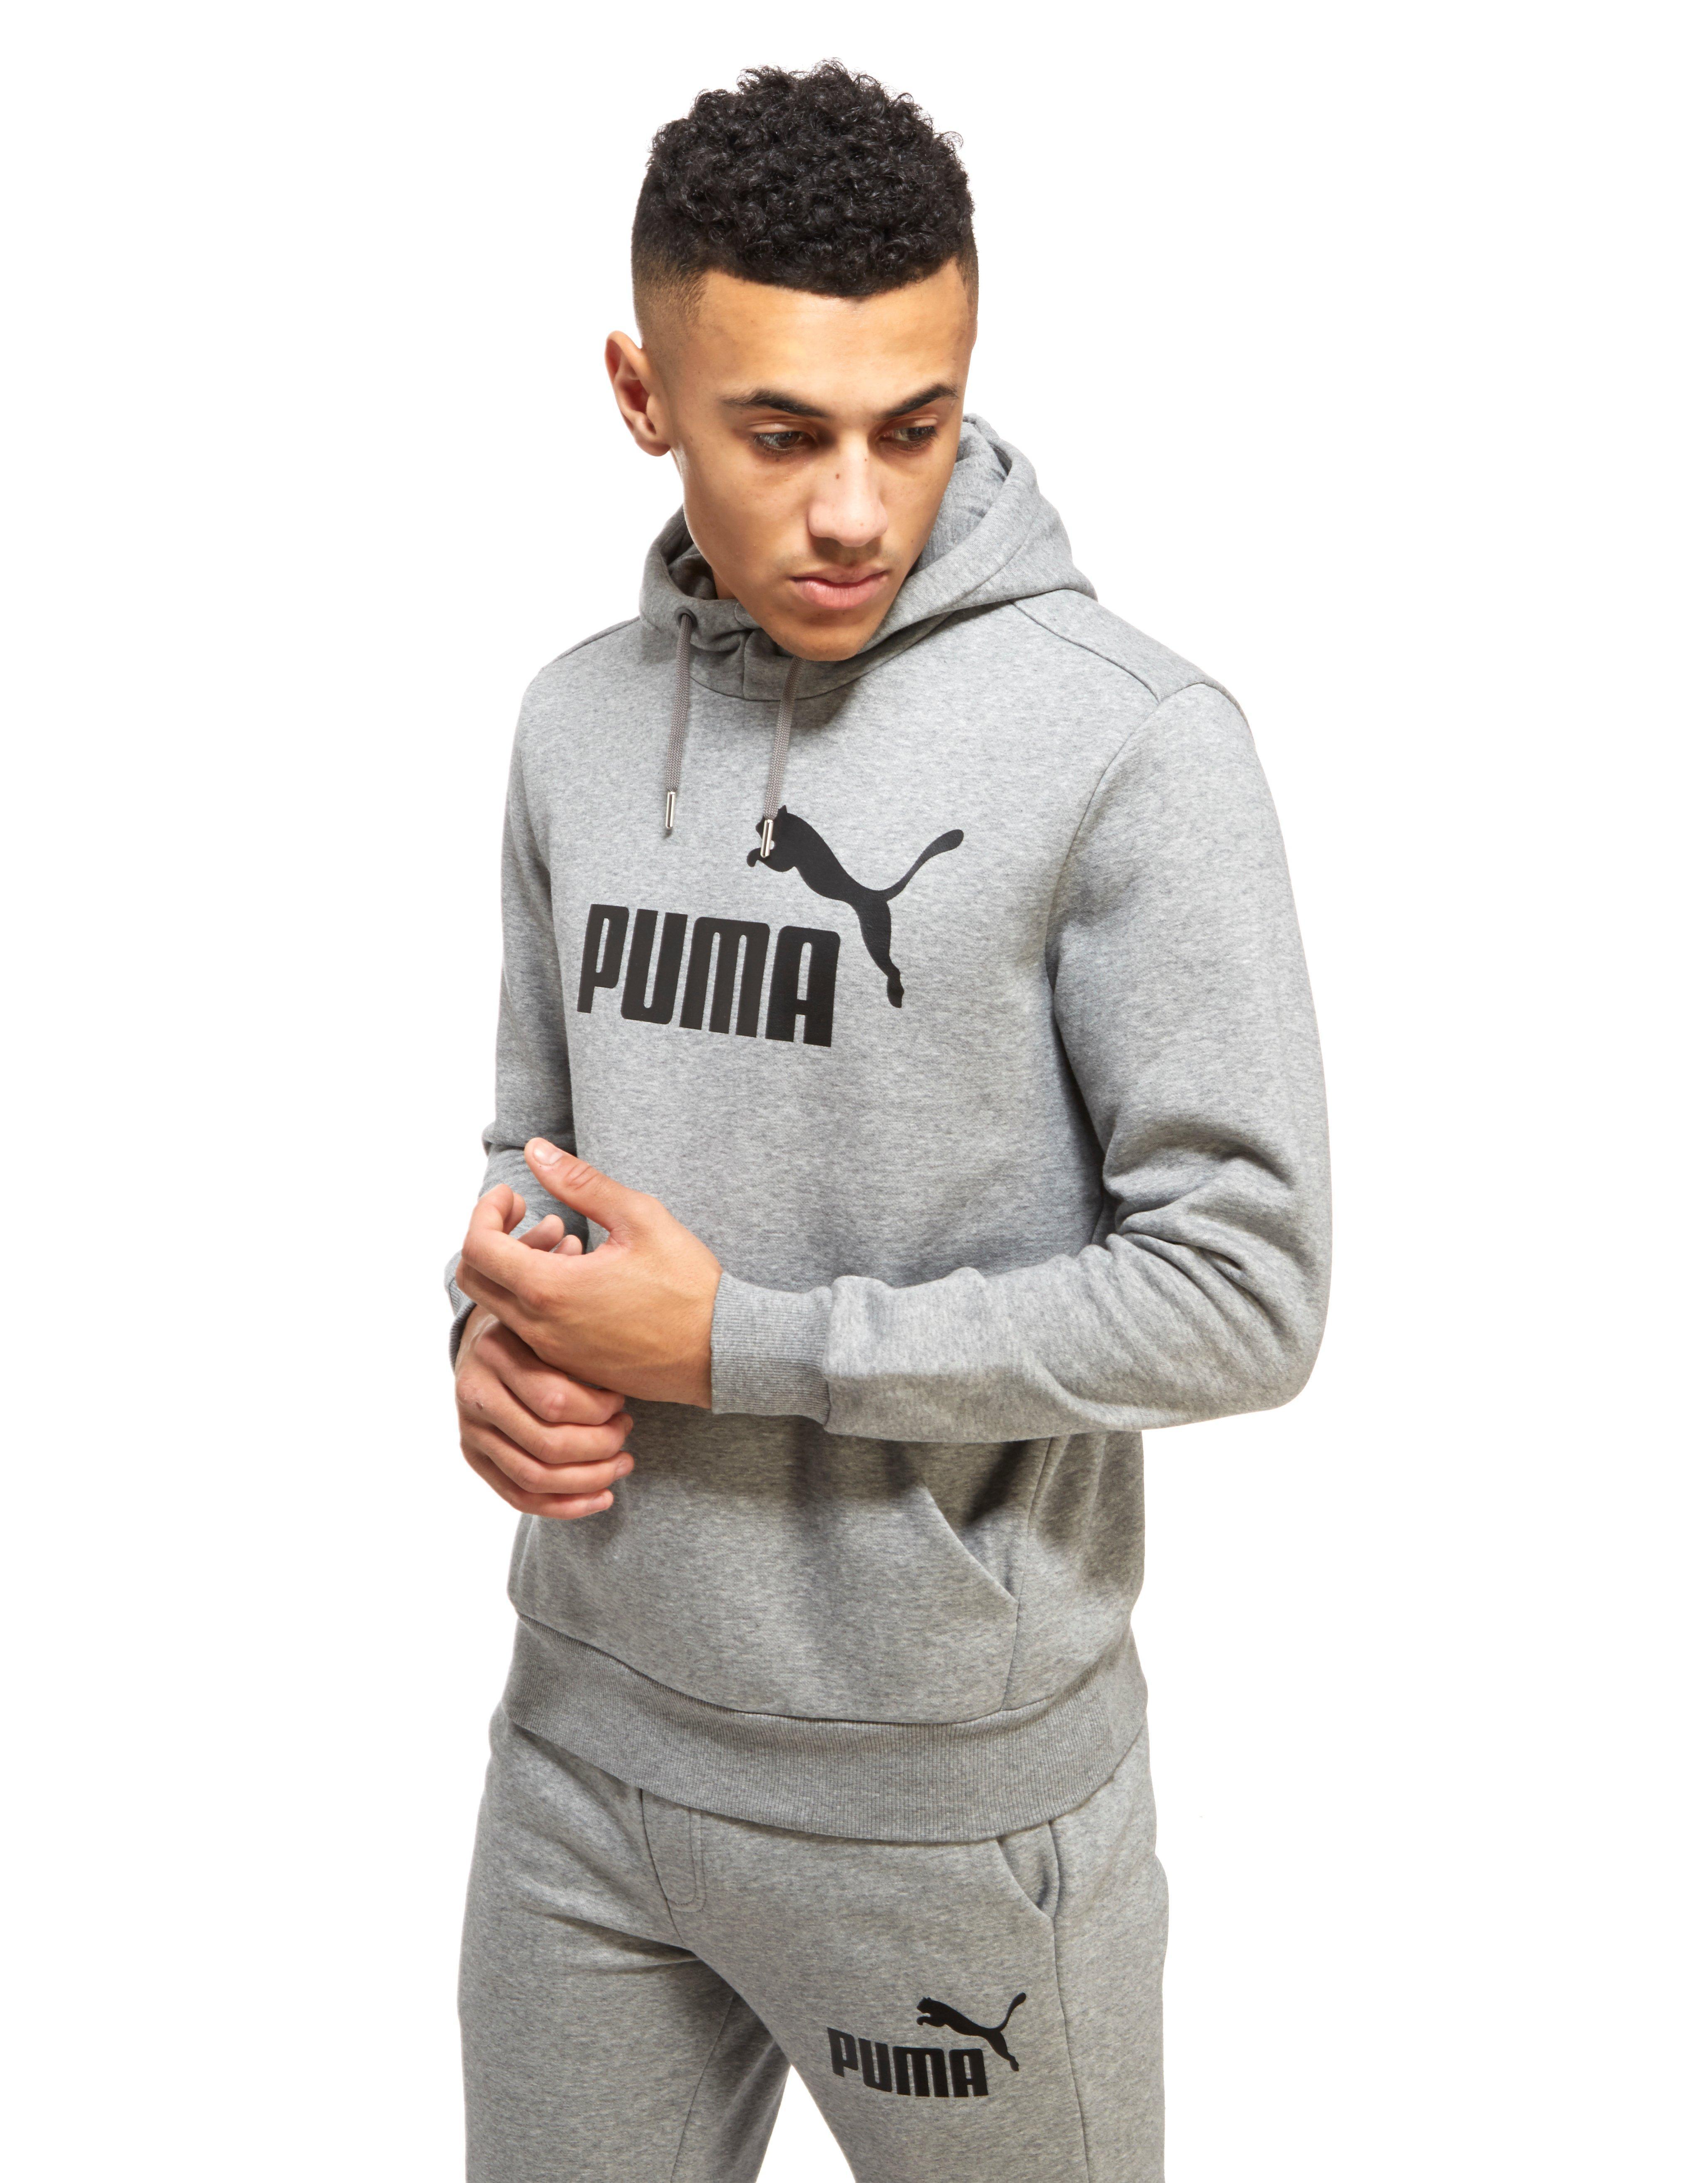 PUMA Cotton Core Logo Overhead Hoody in Grey (Grey) for Men - Lyst